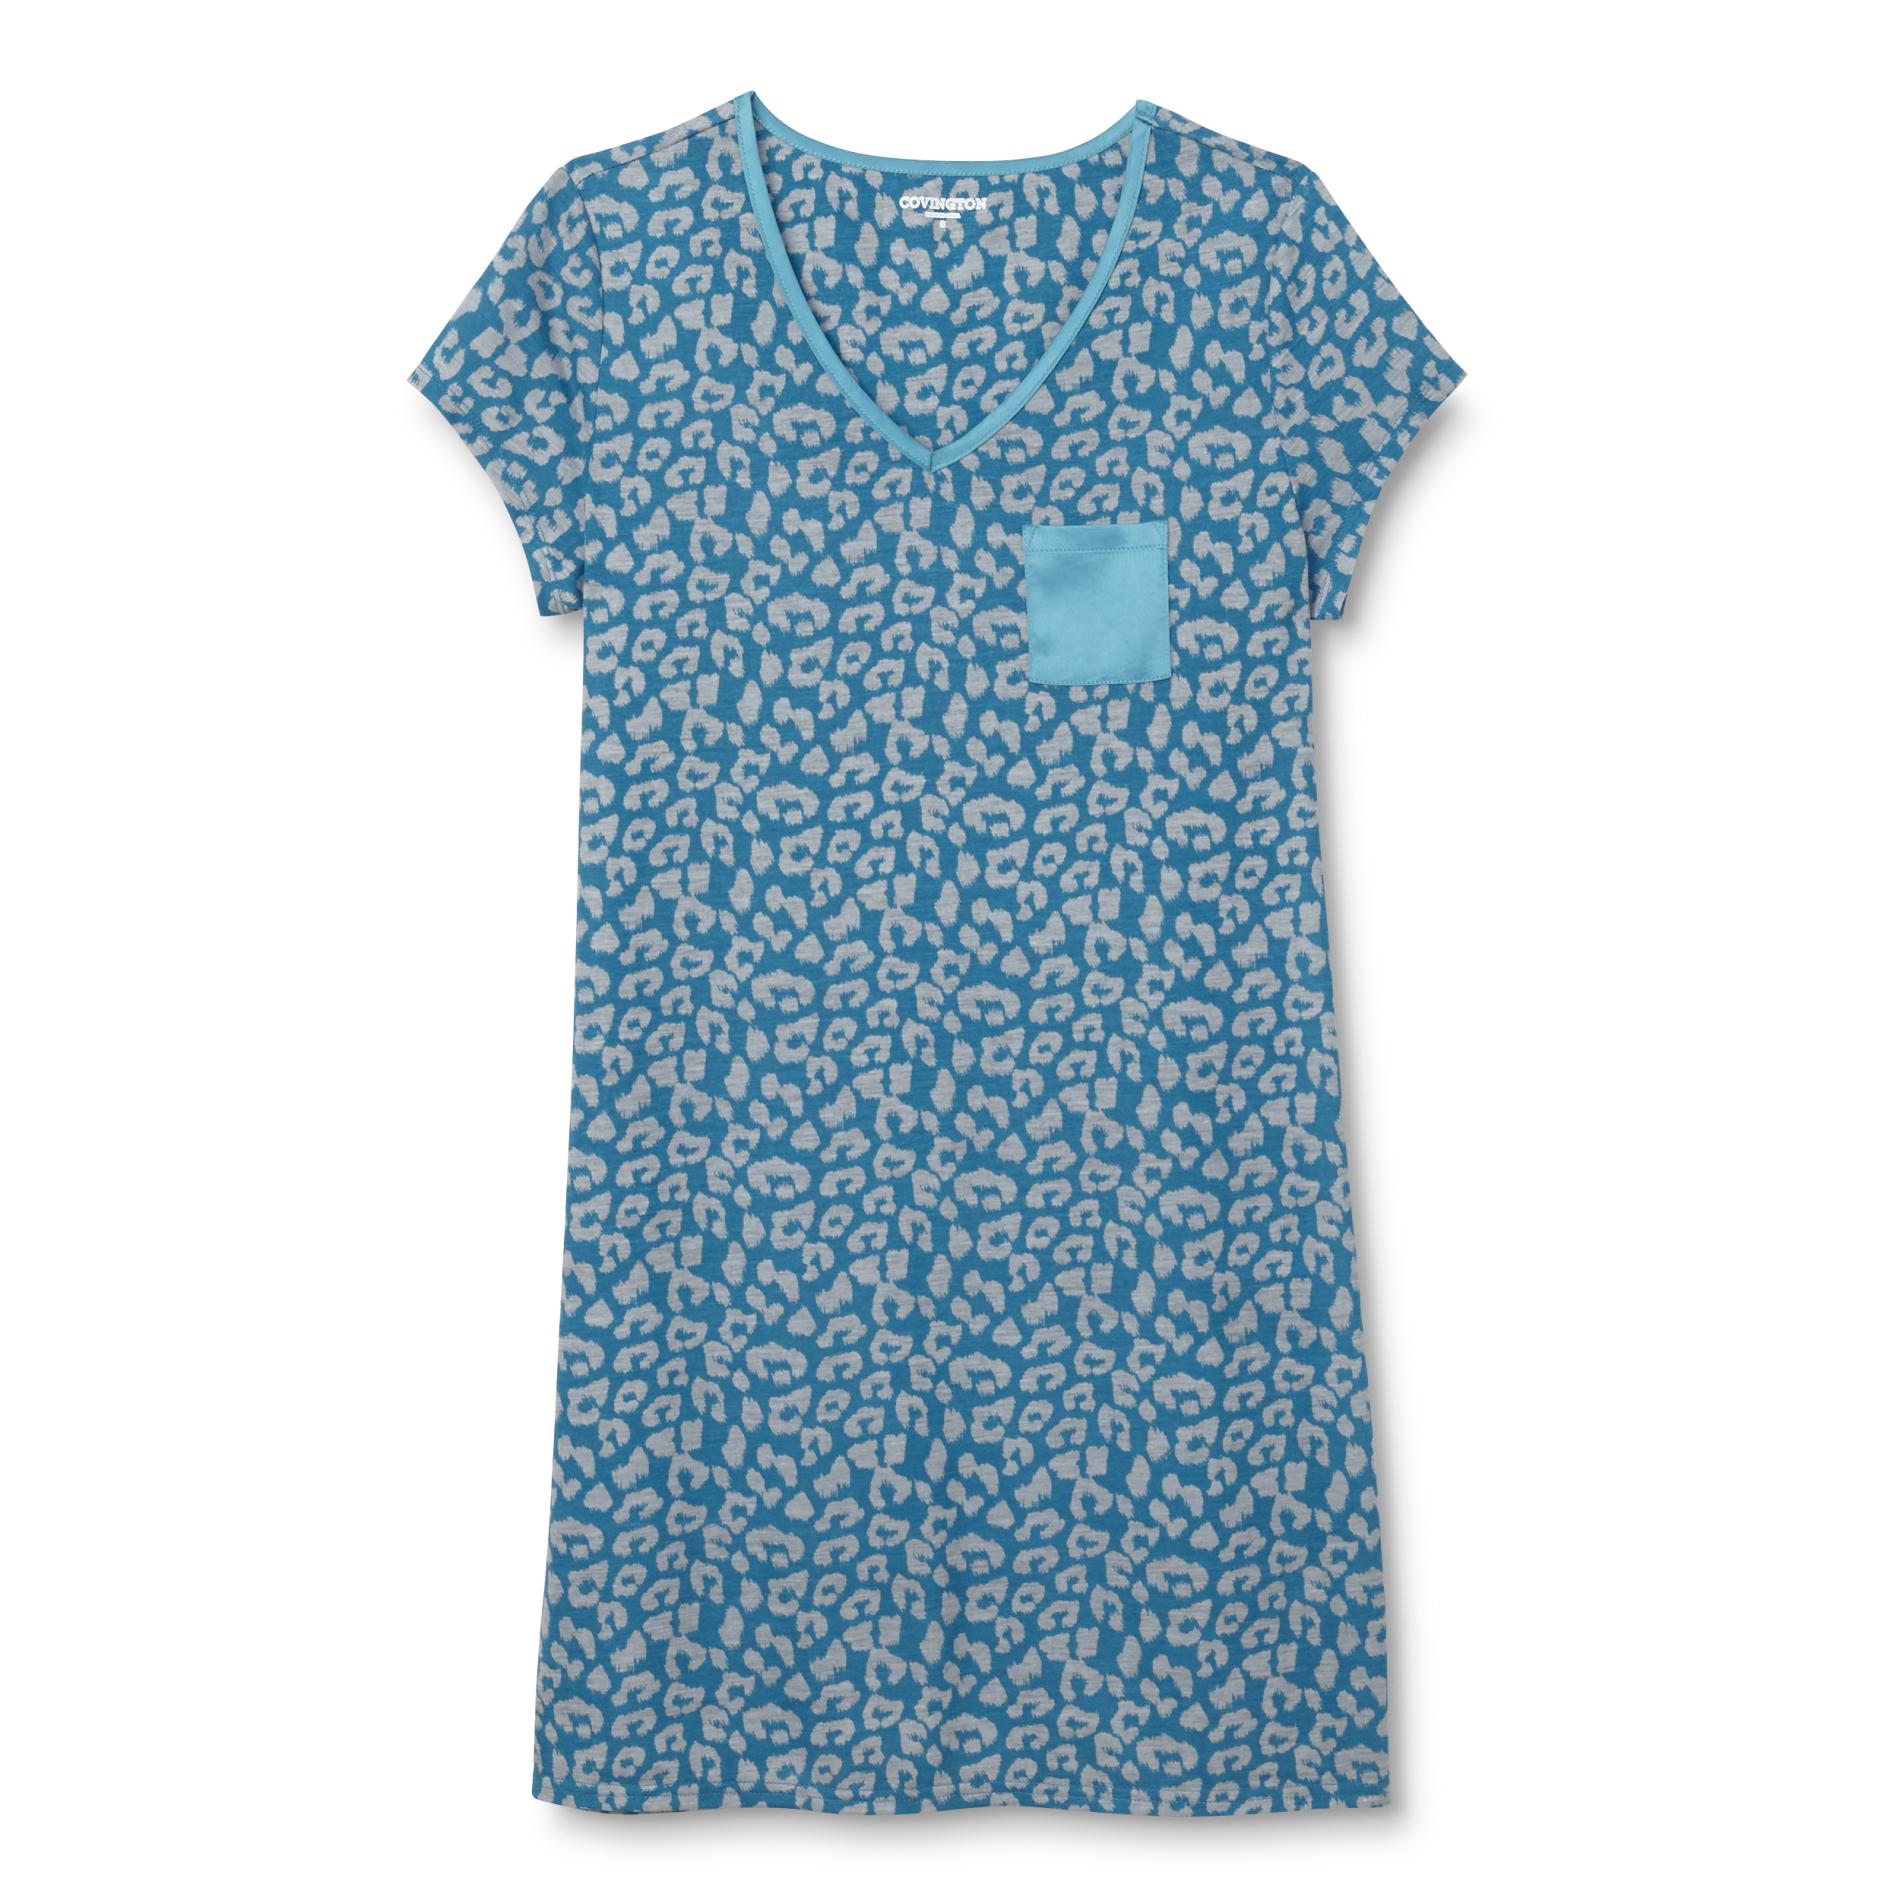 Covington Women's Plus Sleep Shirt - Leopard Print